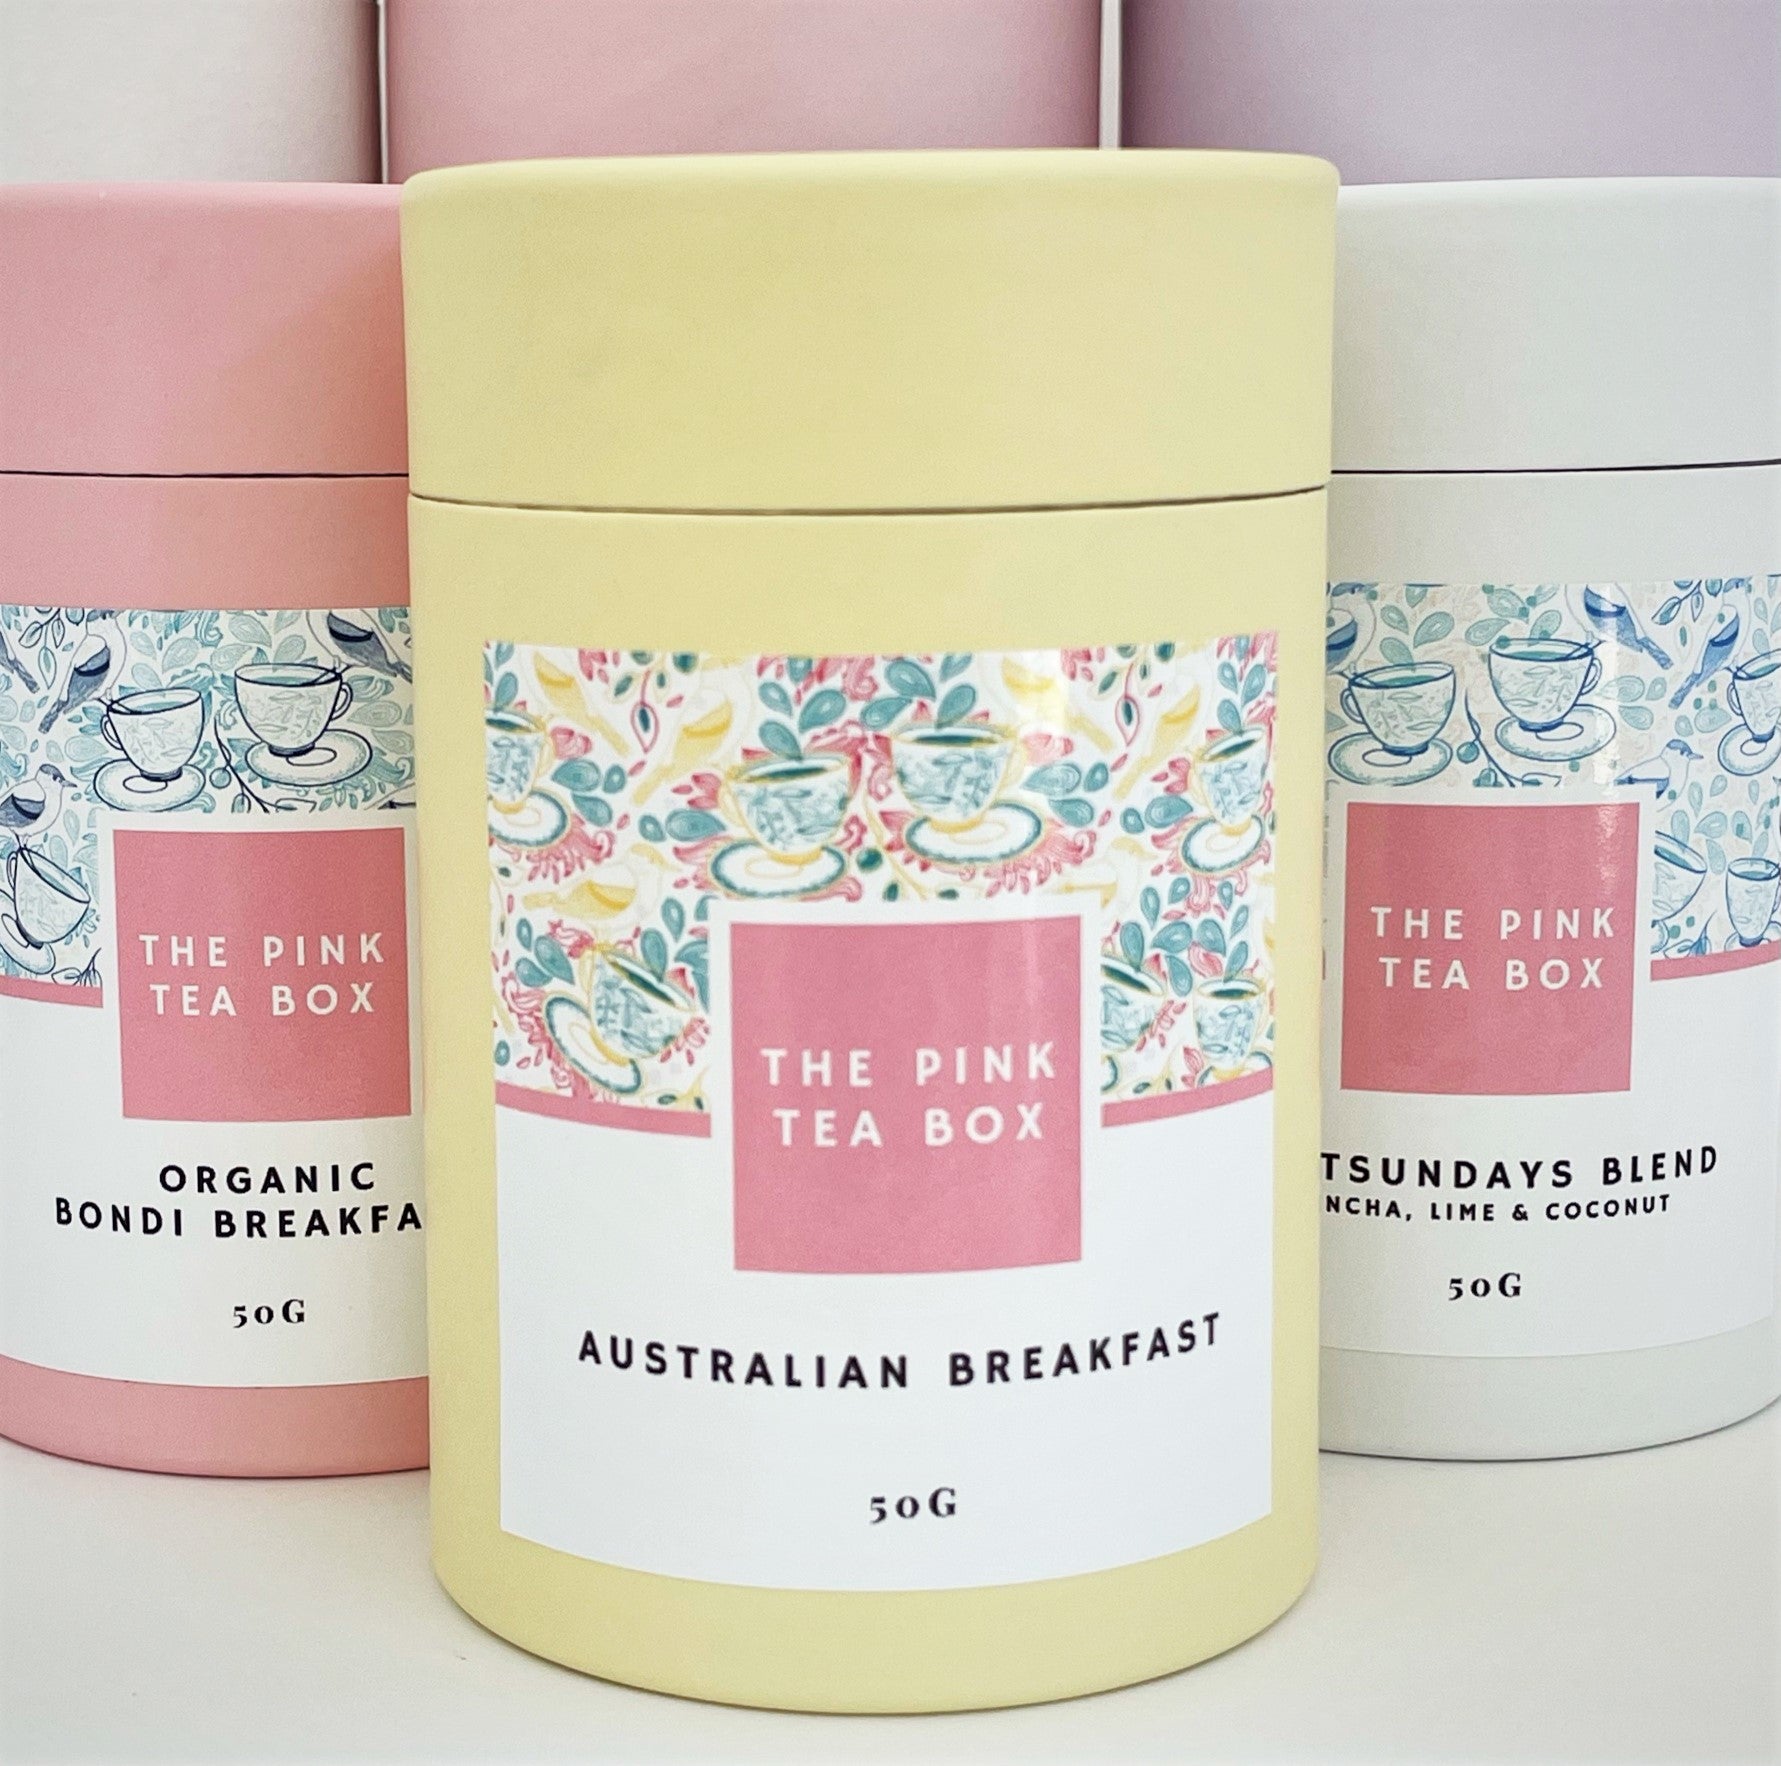 Pretty lemon coloured tea canister containing Australian Breakfast Tea from the Pink Tea Box